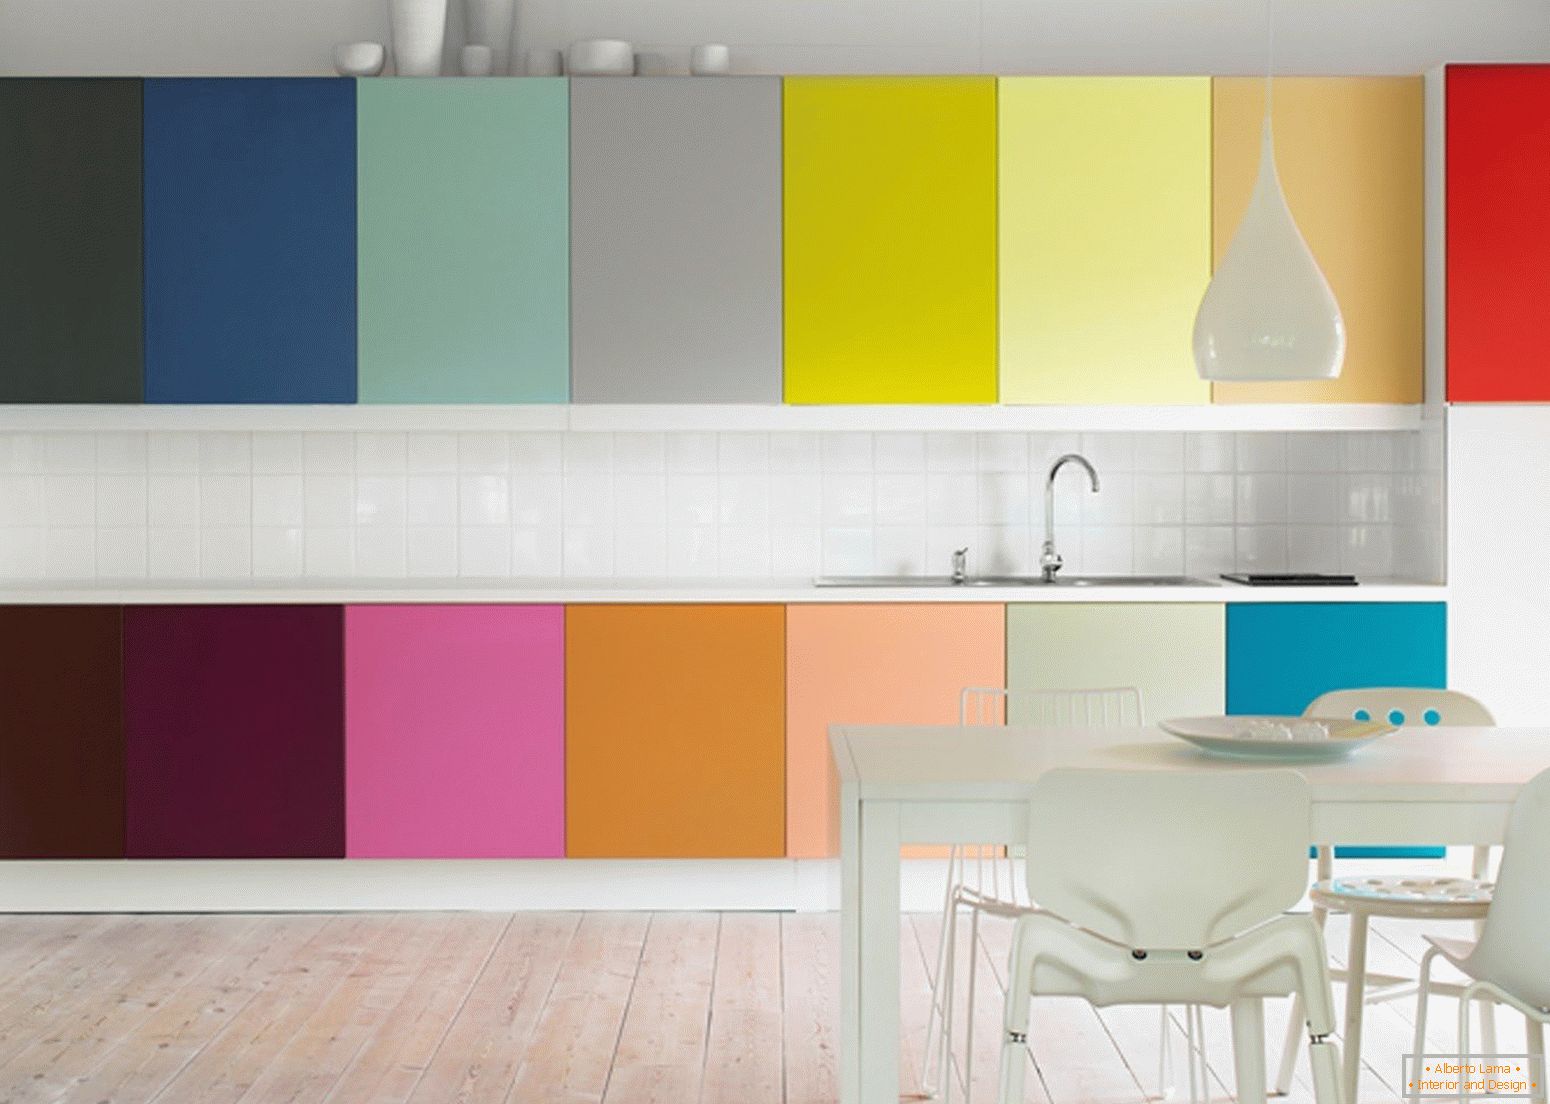 Barvna shema v kuhinji